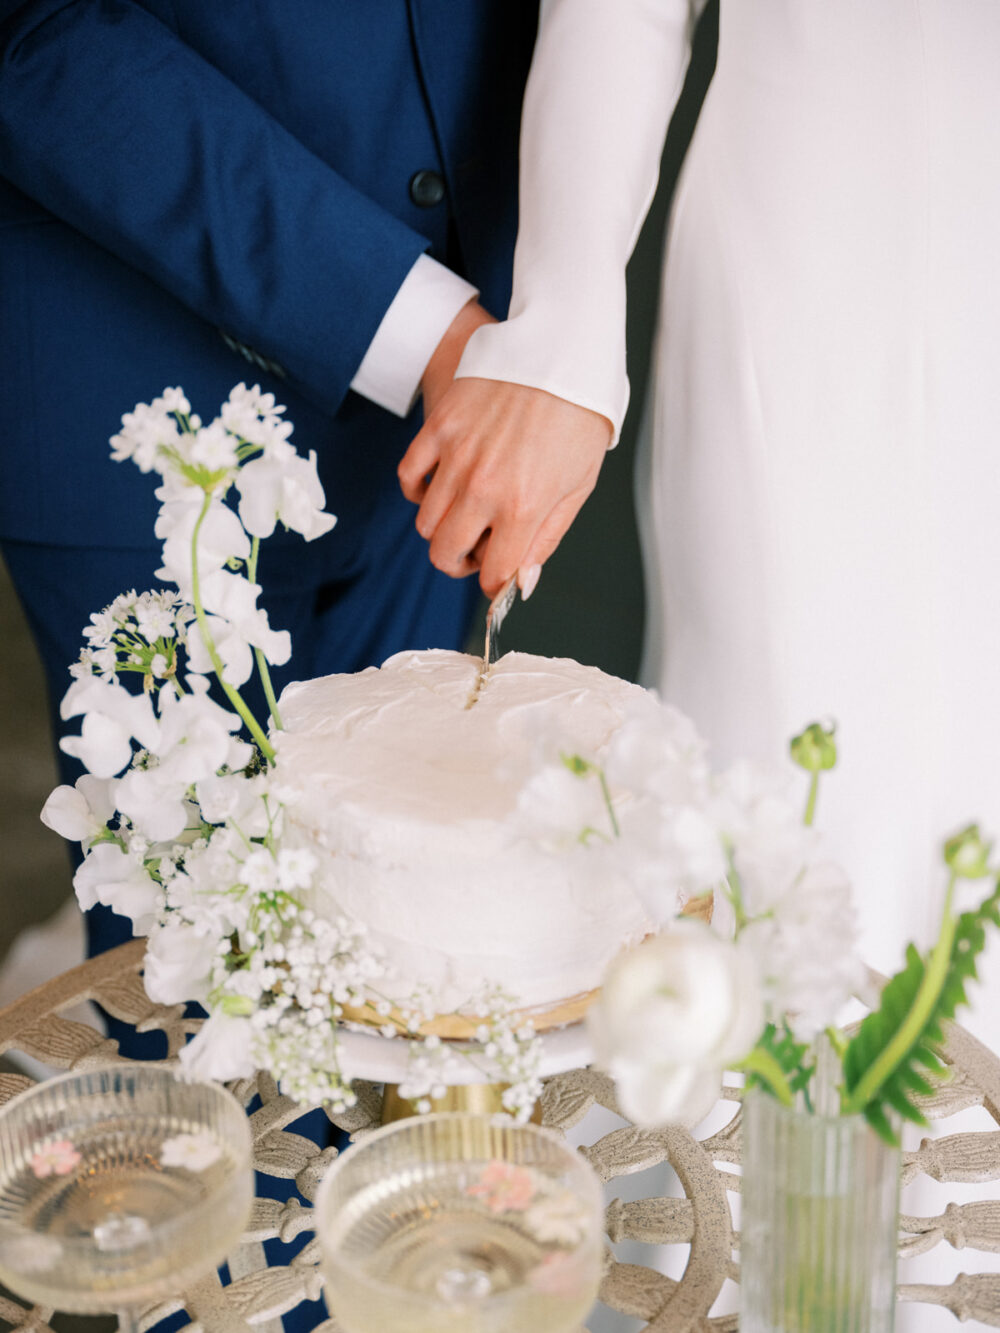 Bride and groom cutting their wedding cake in Orlando, Florida